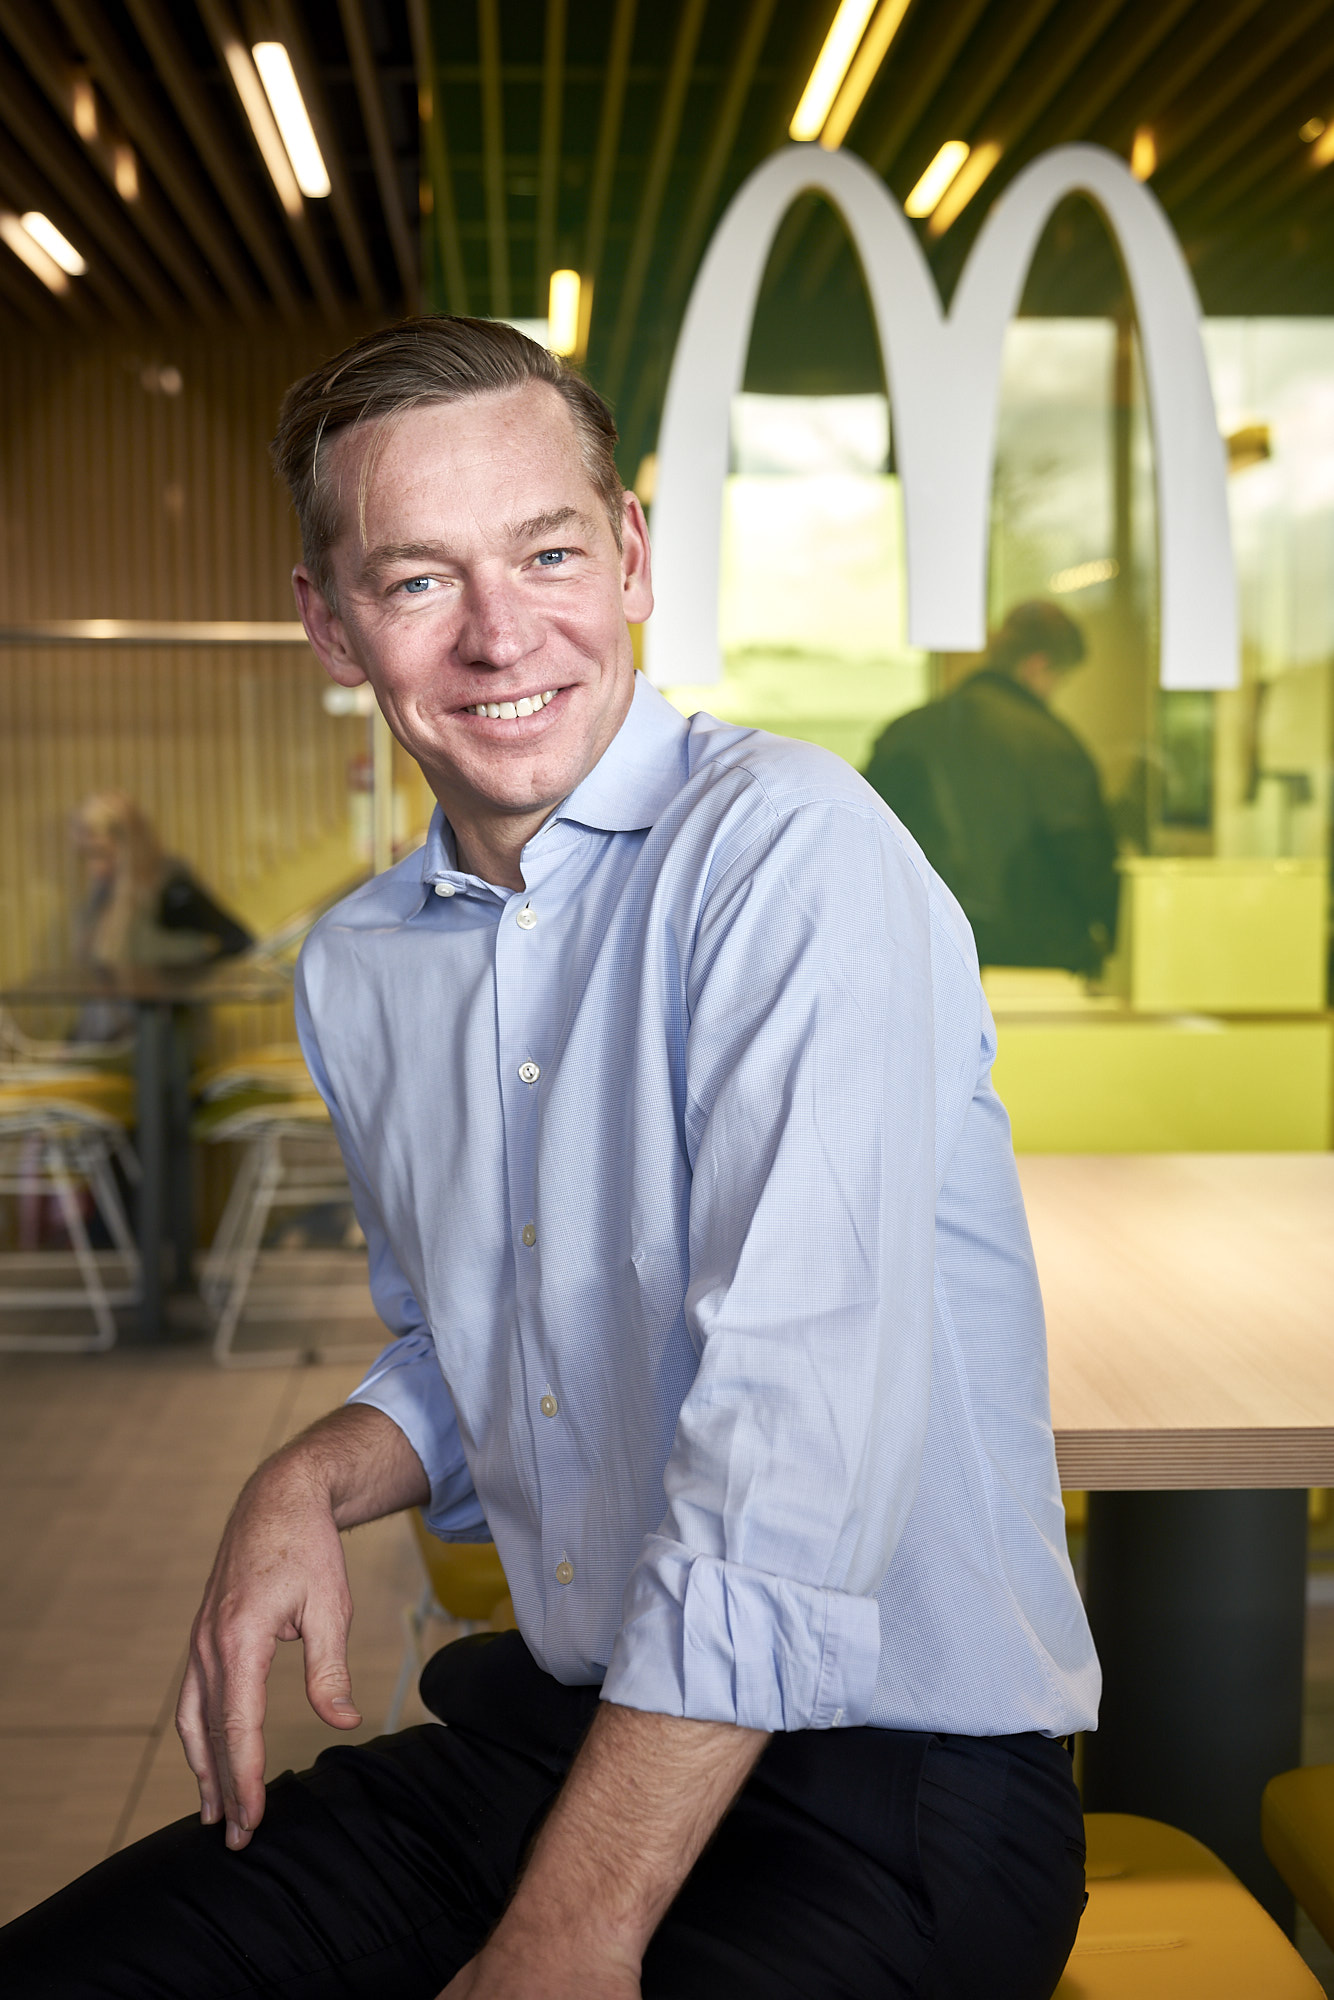 Chris Kempczinski, CEO of McDonald's